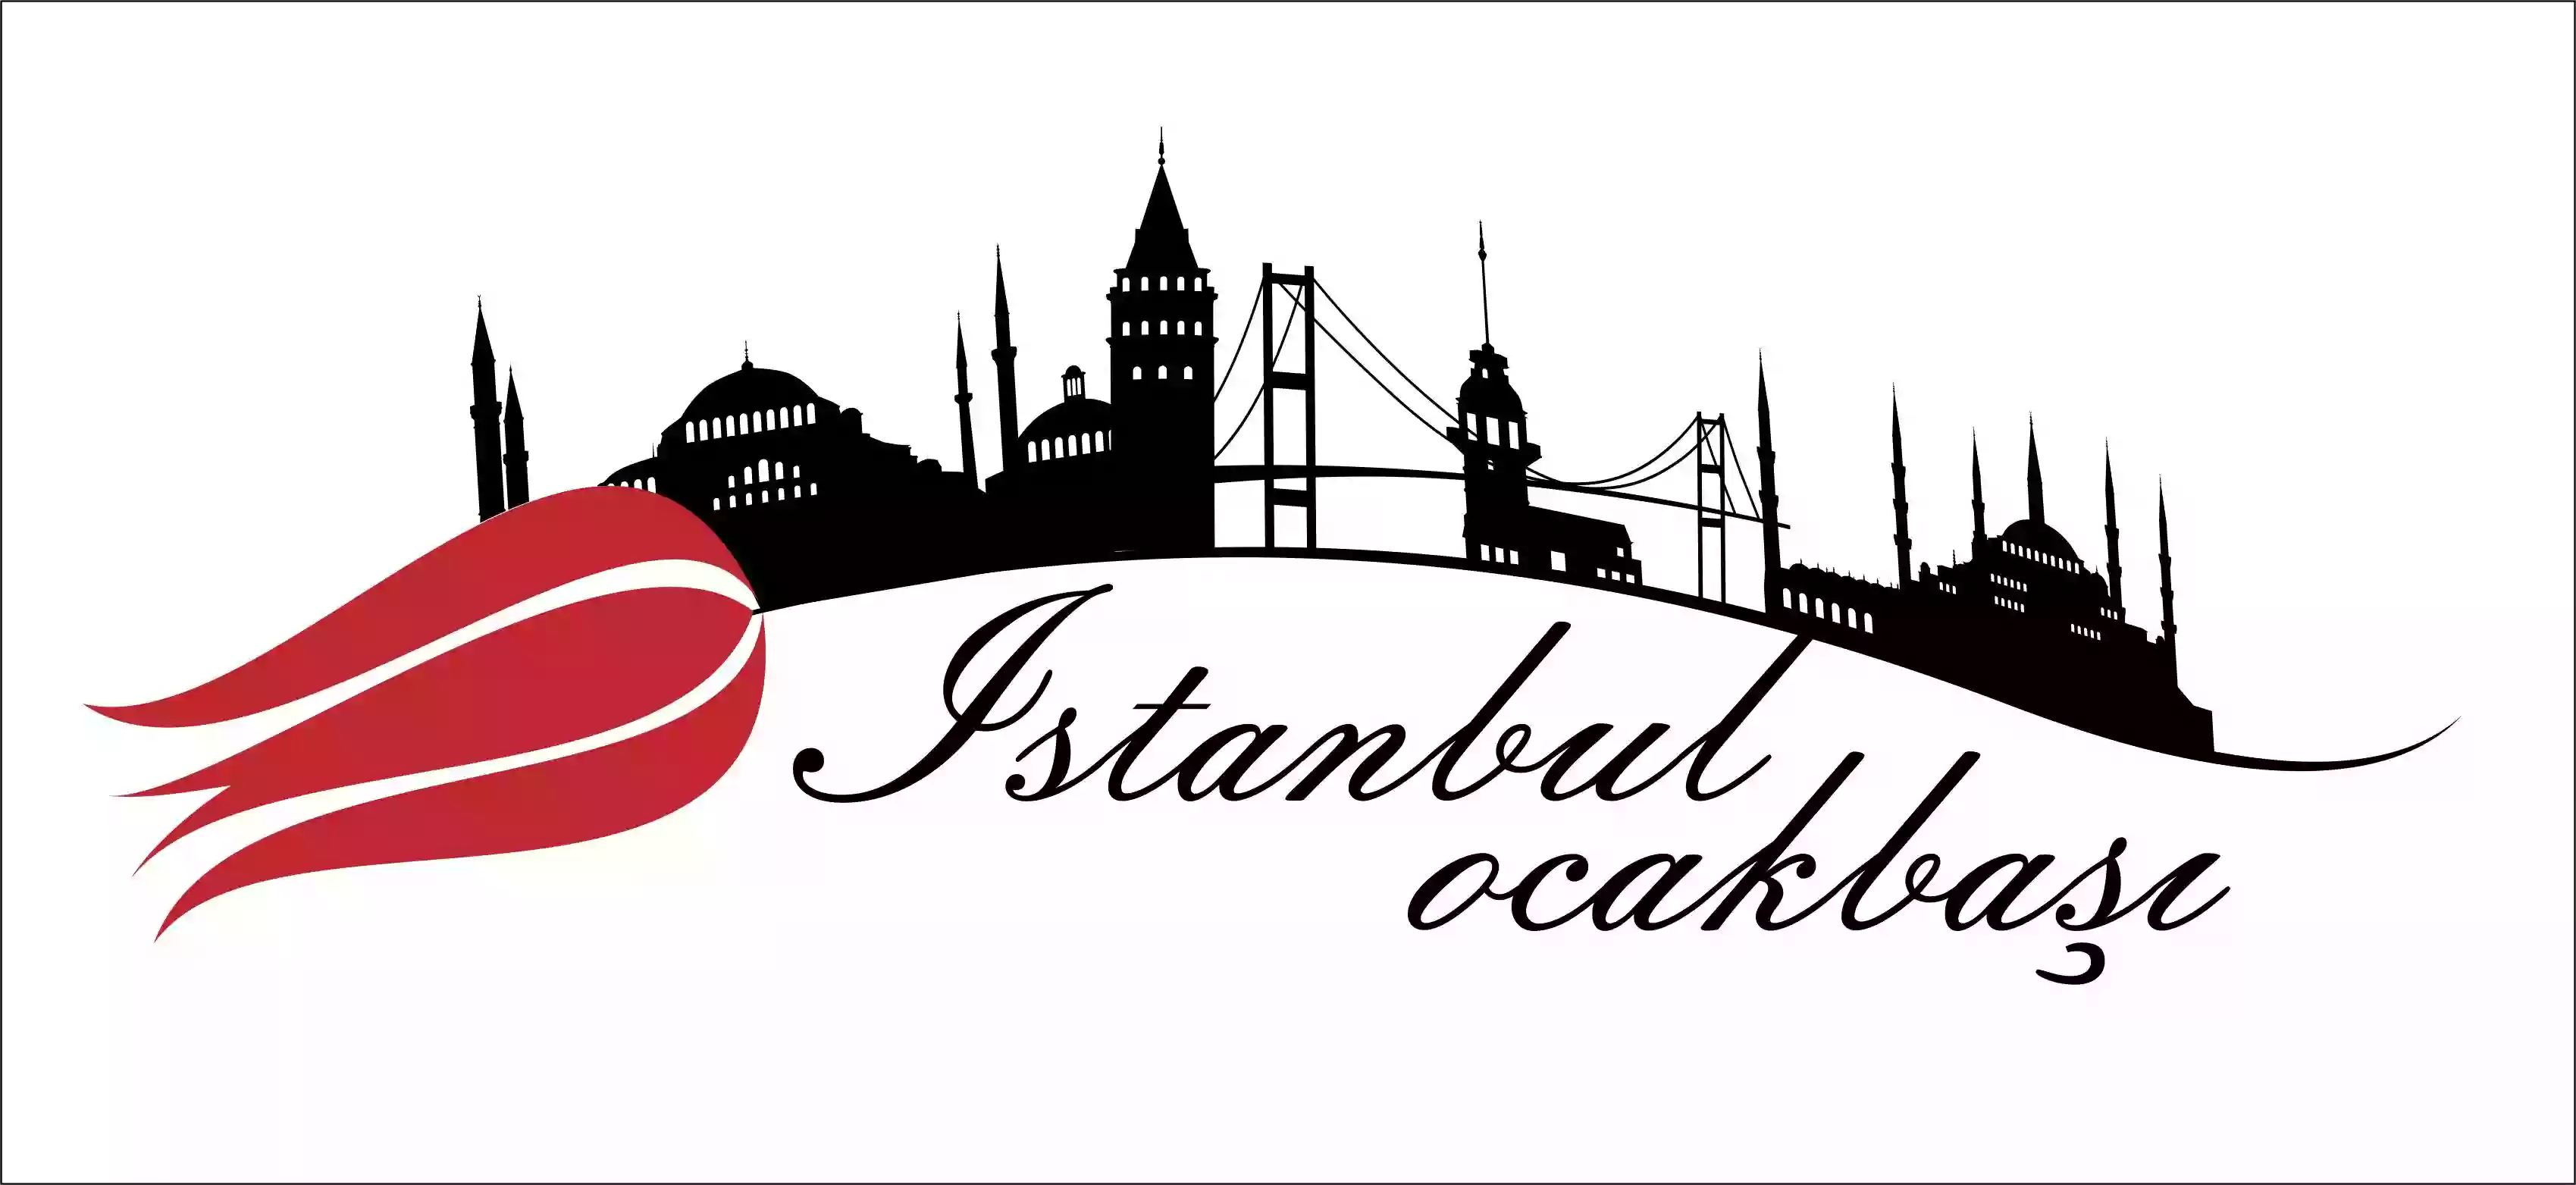 İstanbul Ocakbaşı